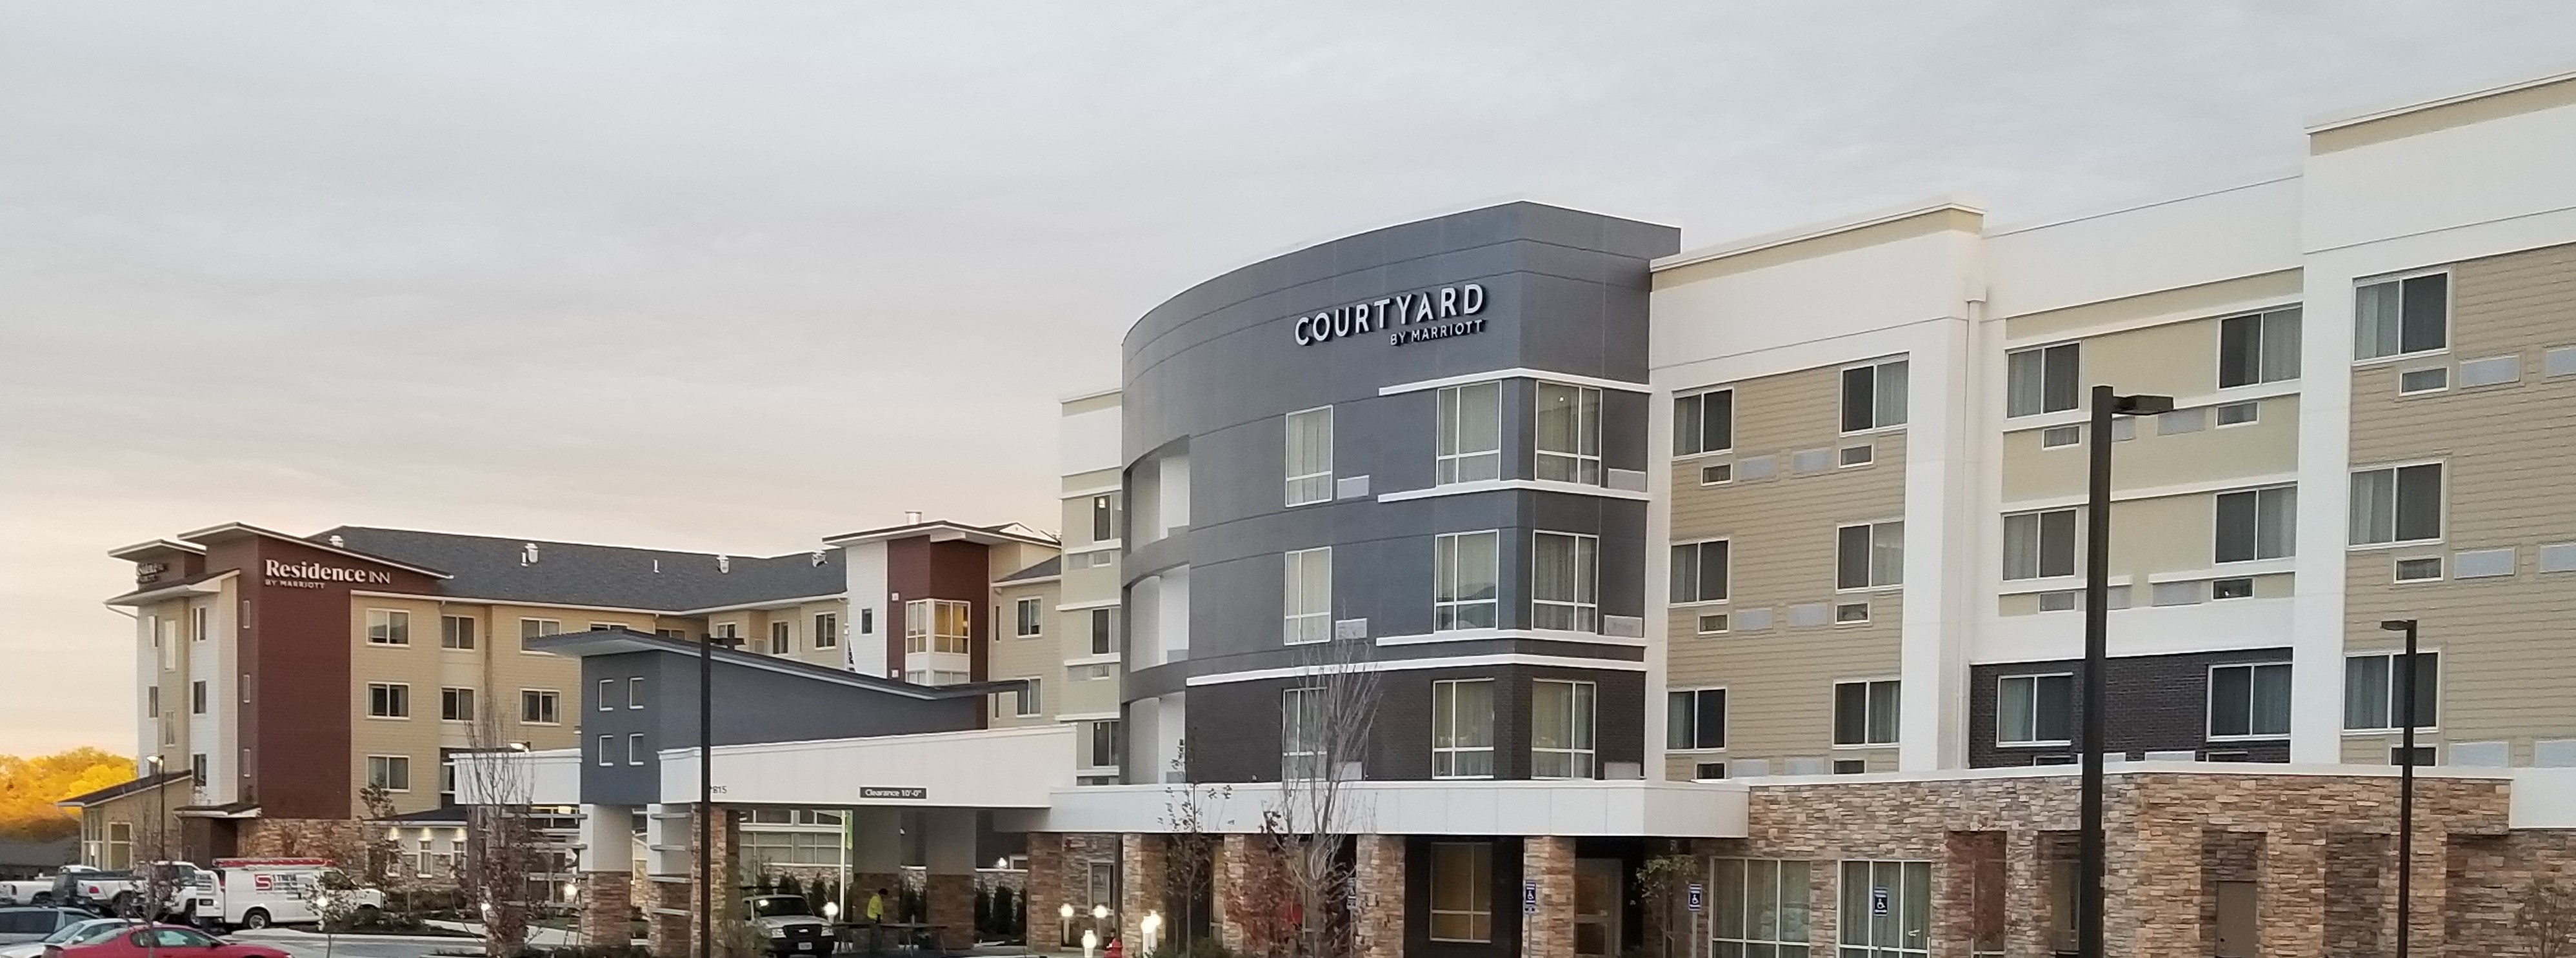 Midas Hospitality Opens Dual-Branded Marriott Hotel in Missouri - Midas Hospitality